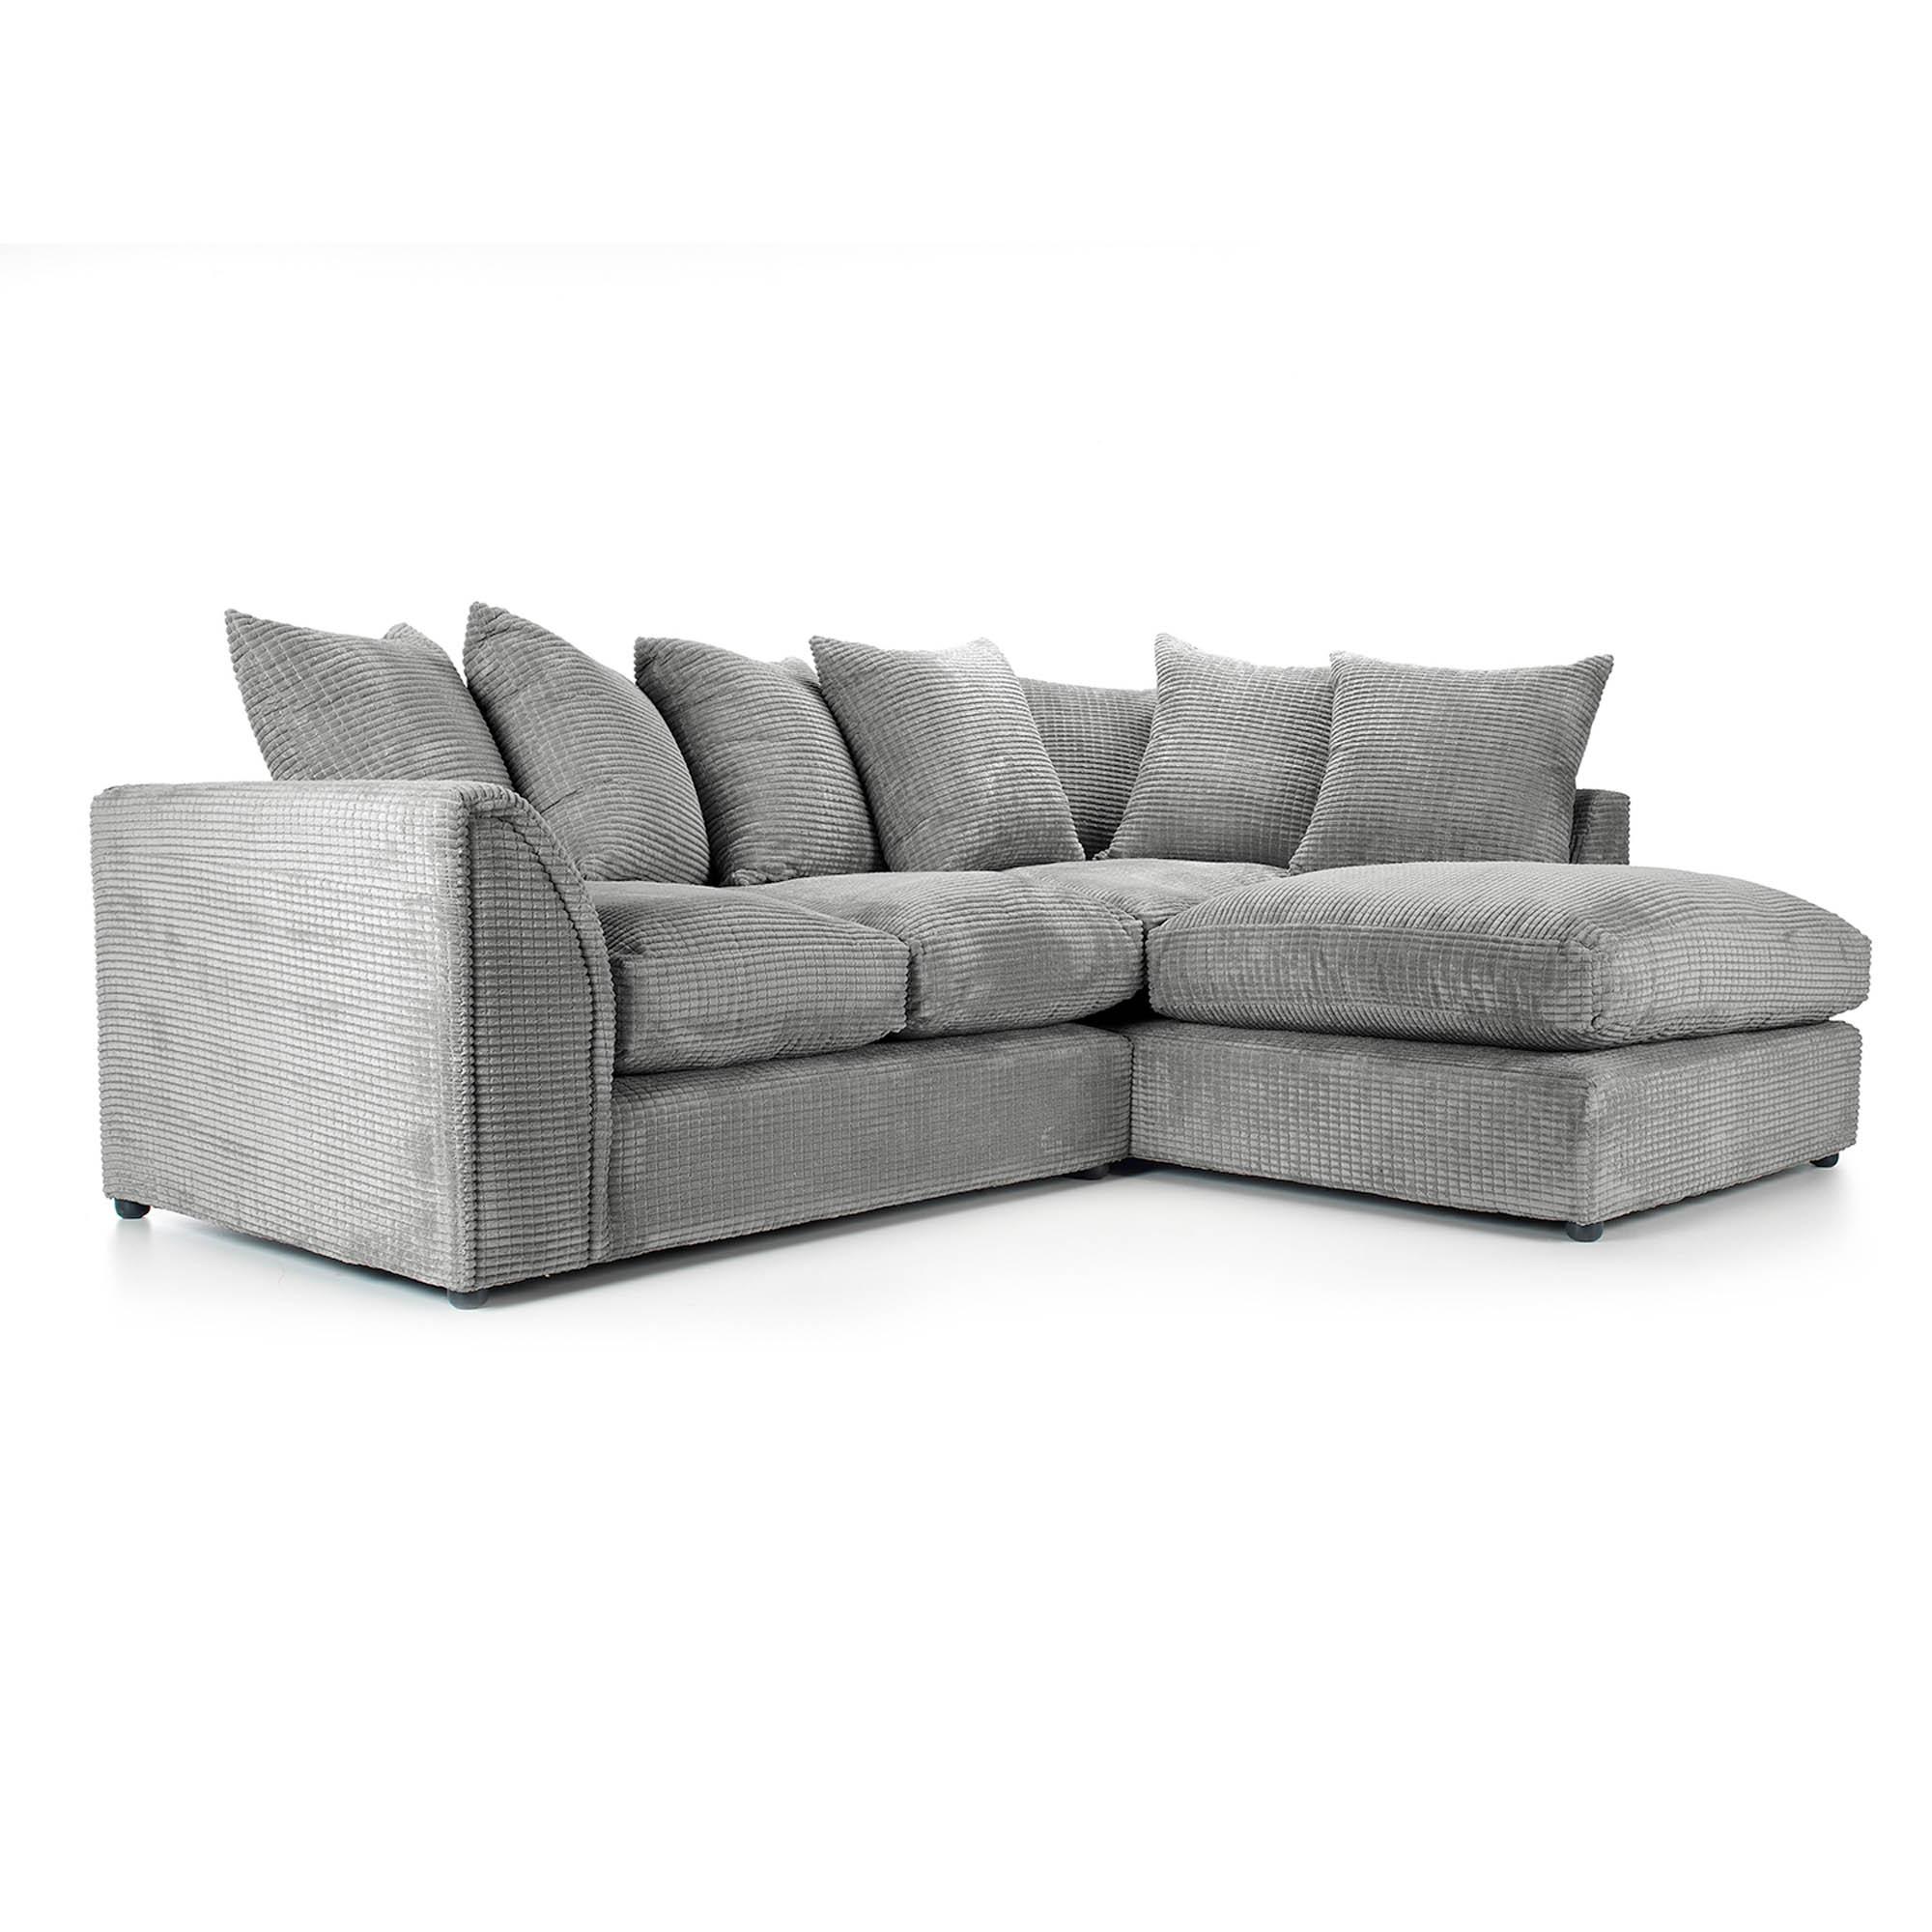 Stunning Grey Corner Sofa Design Ideas